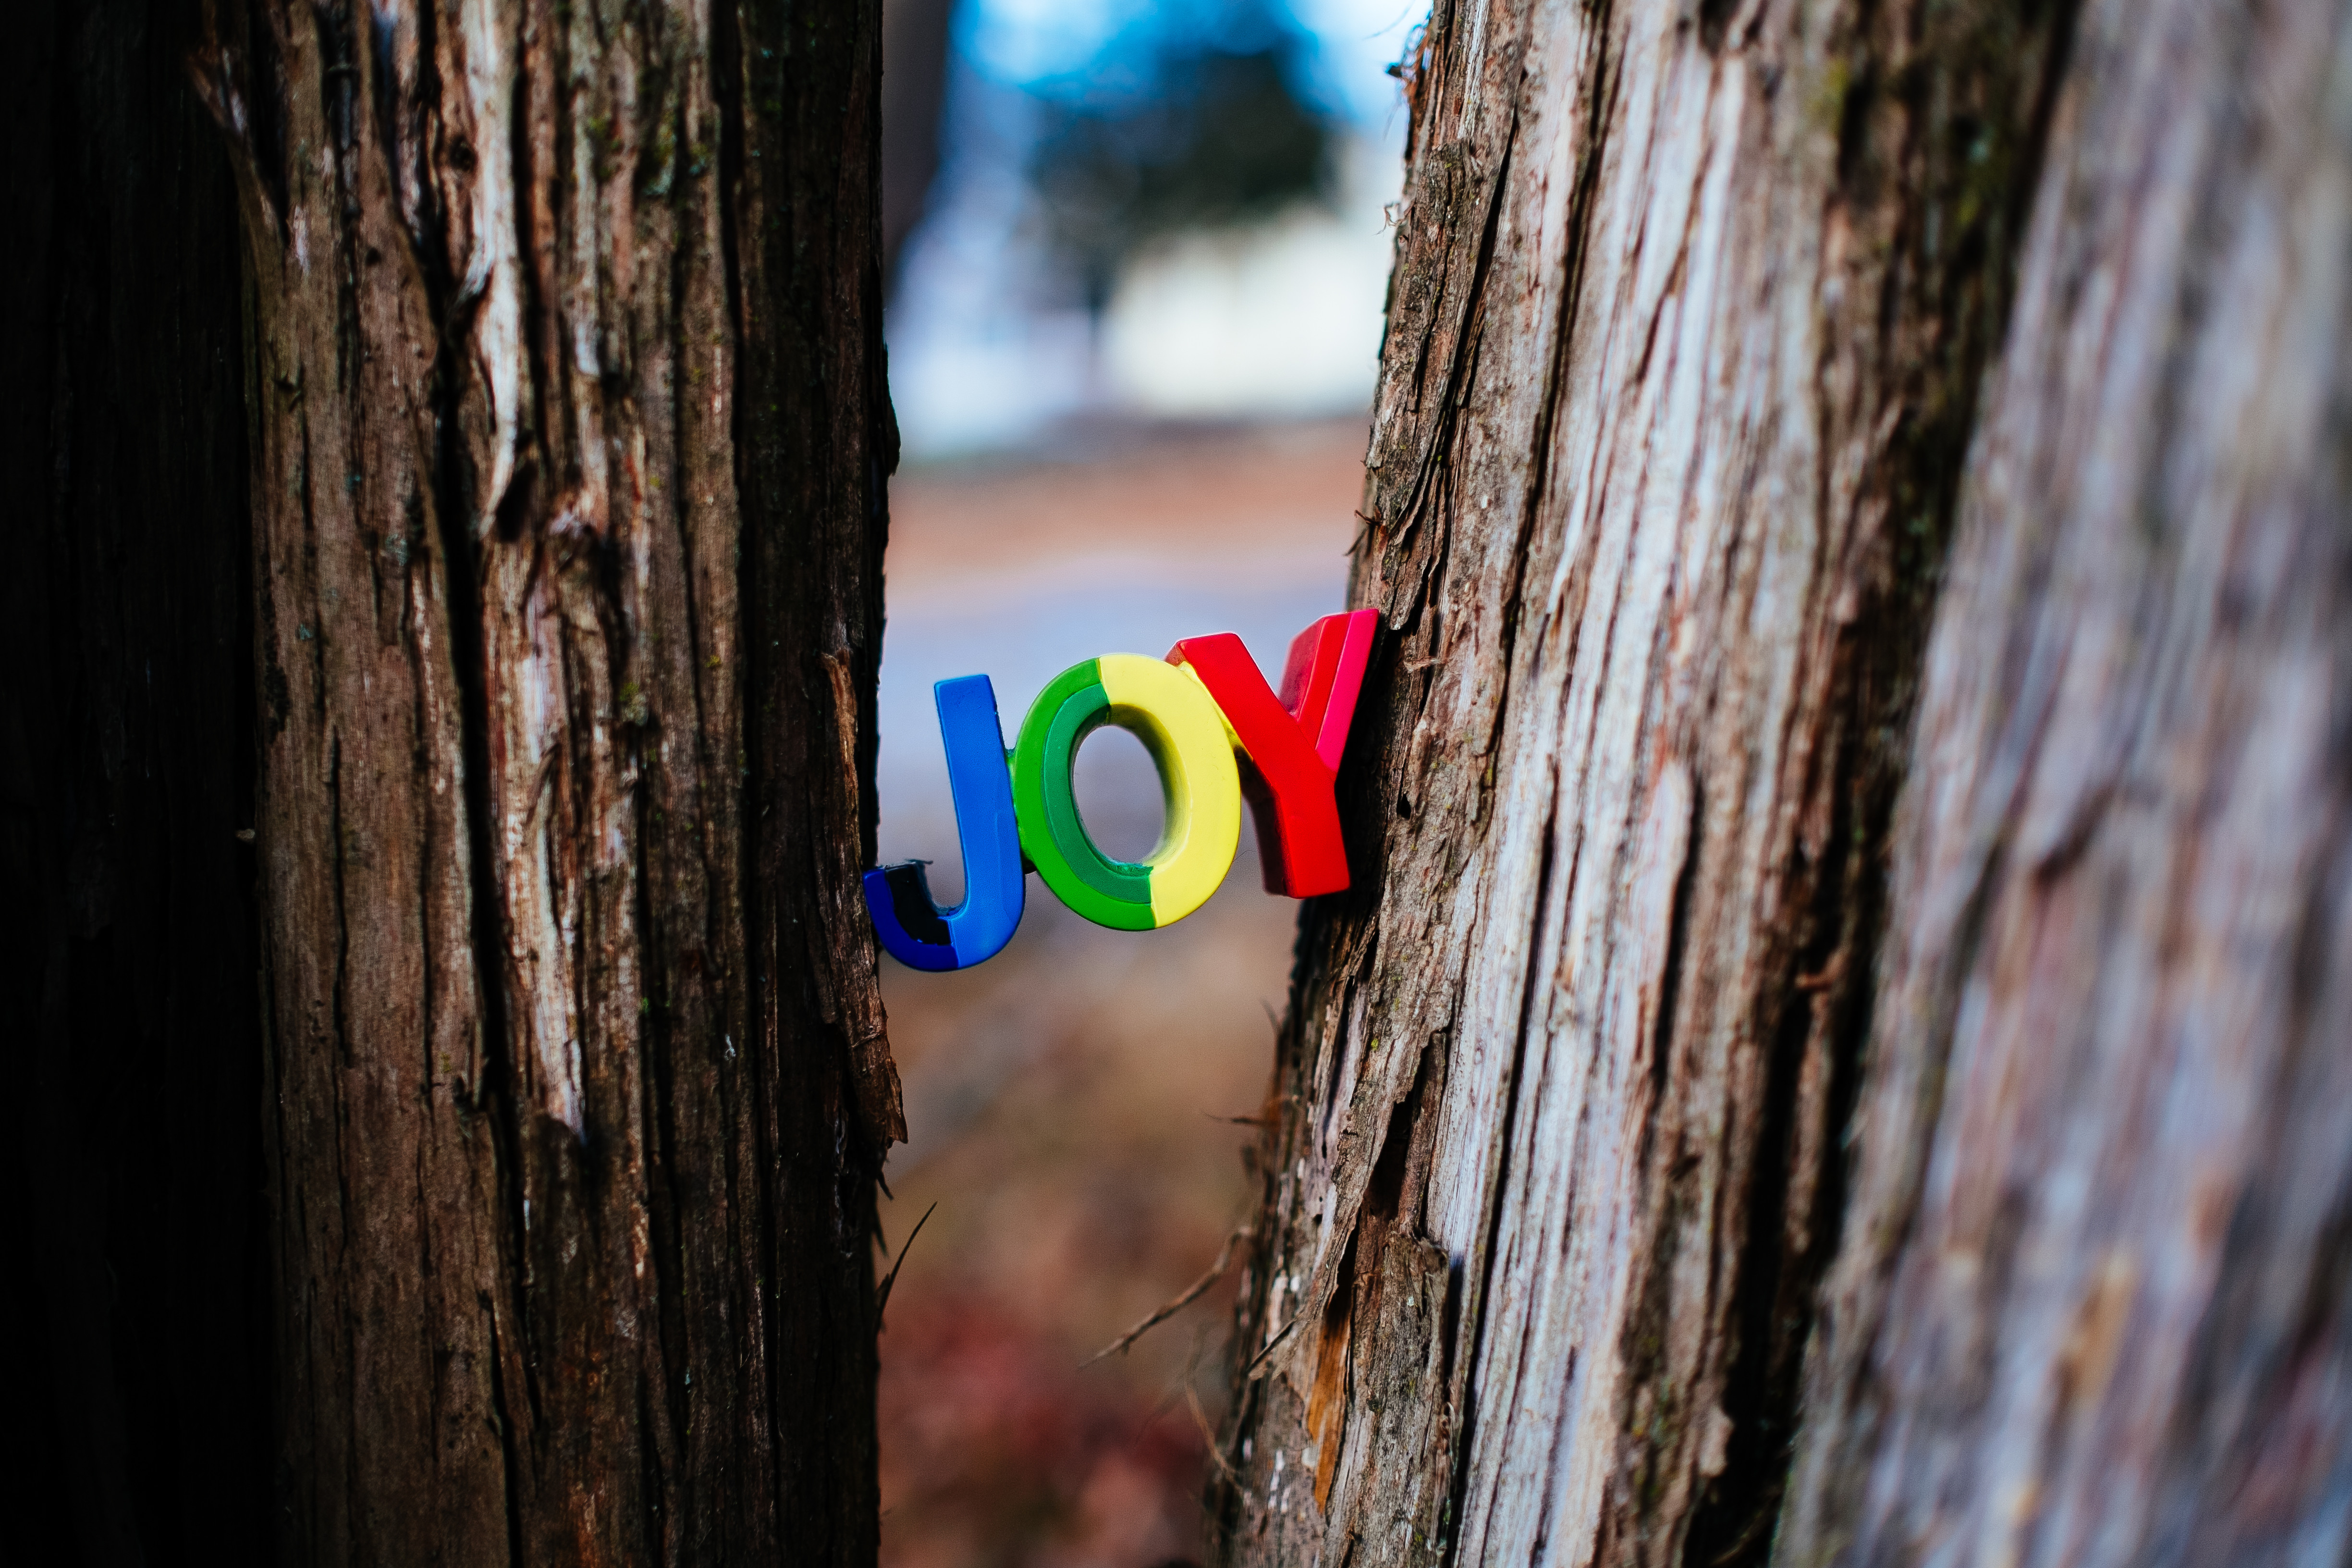 trees, words, inscription, joy